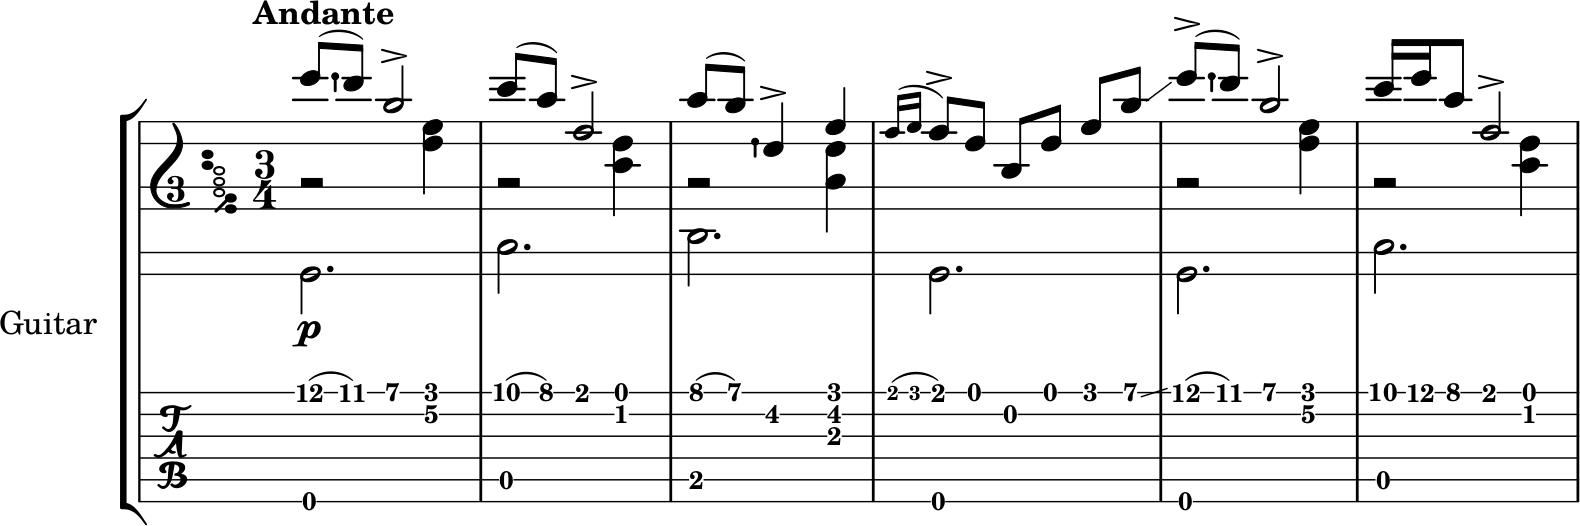 Adelita measures 1-6 with guitar tablature staff added